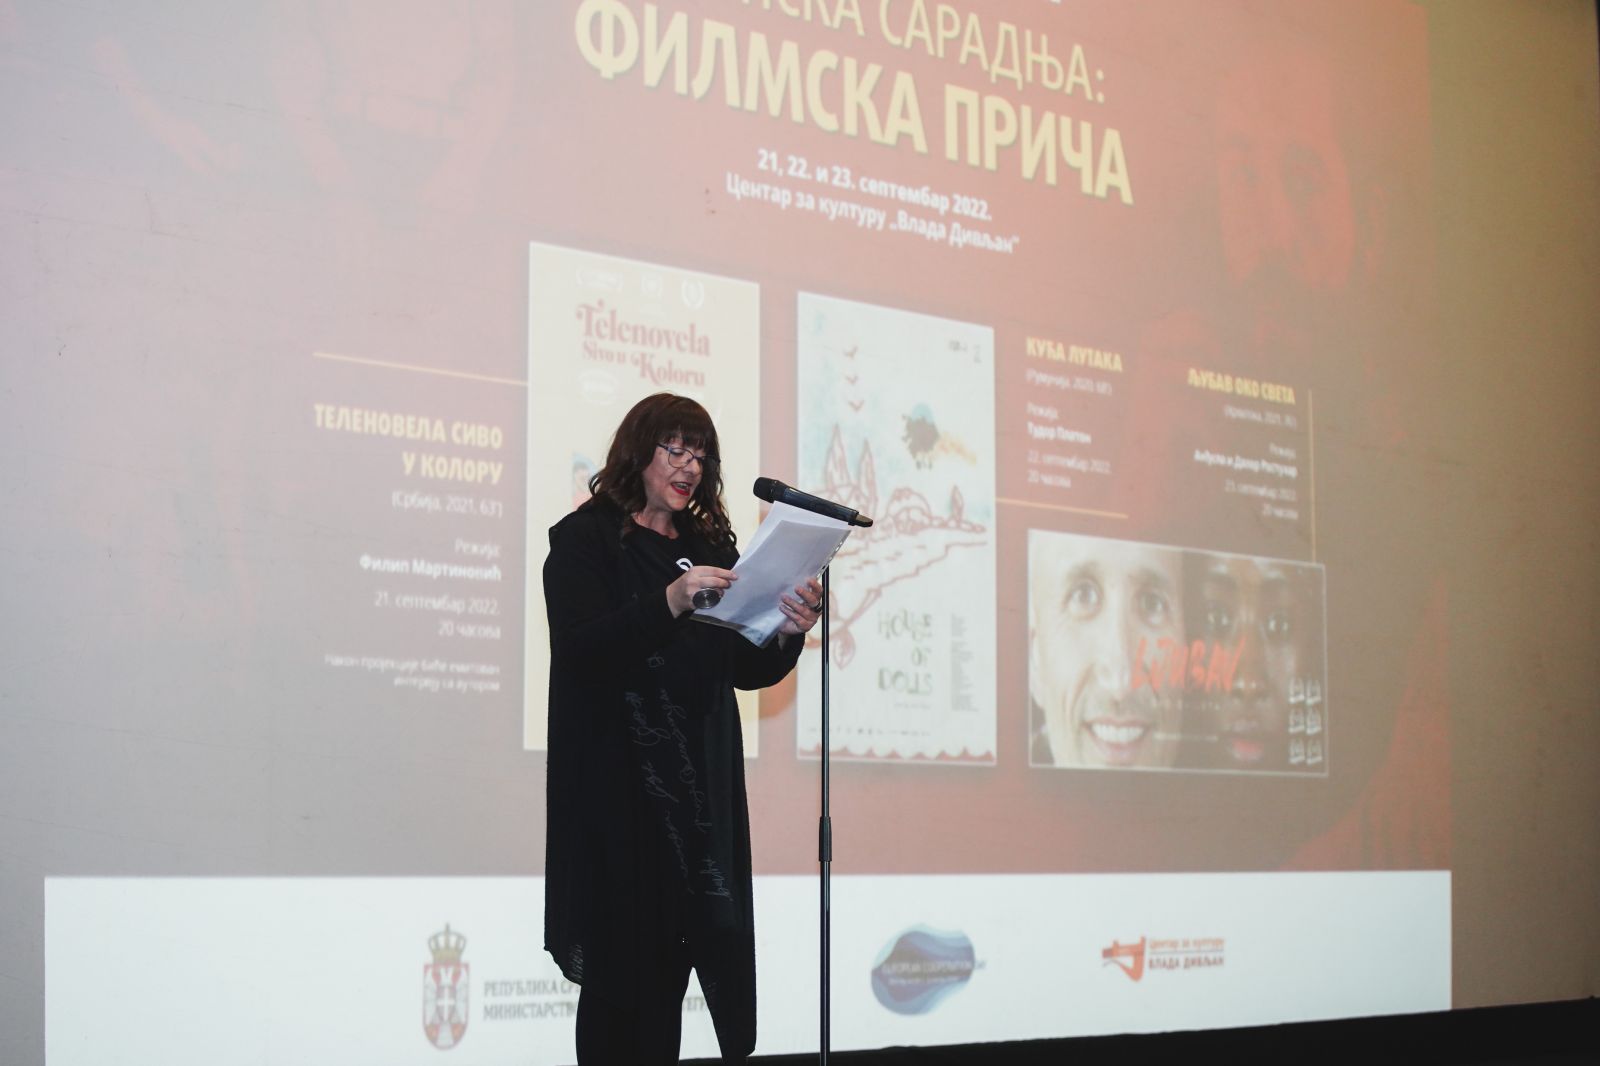 Отворен седми фестивал документарног филма „Европска сарадња: филмска прича“